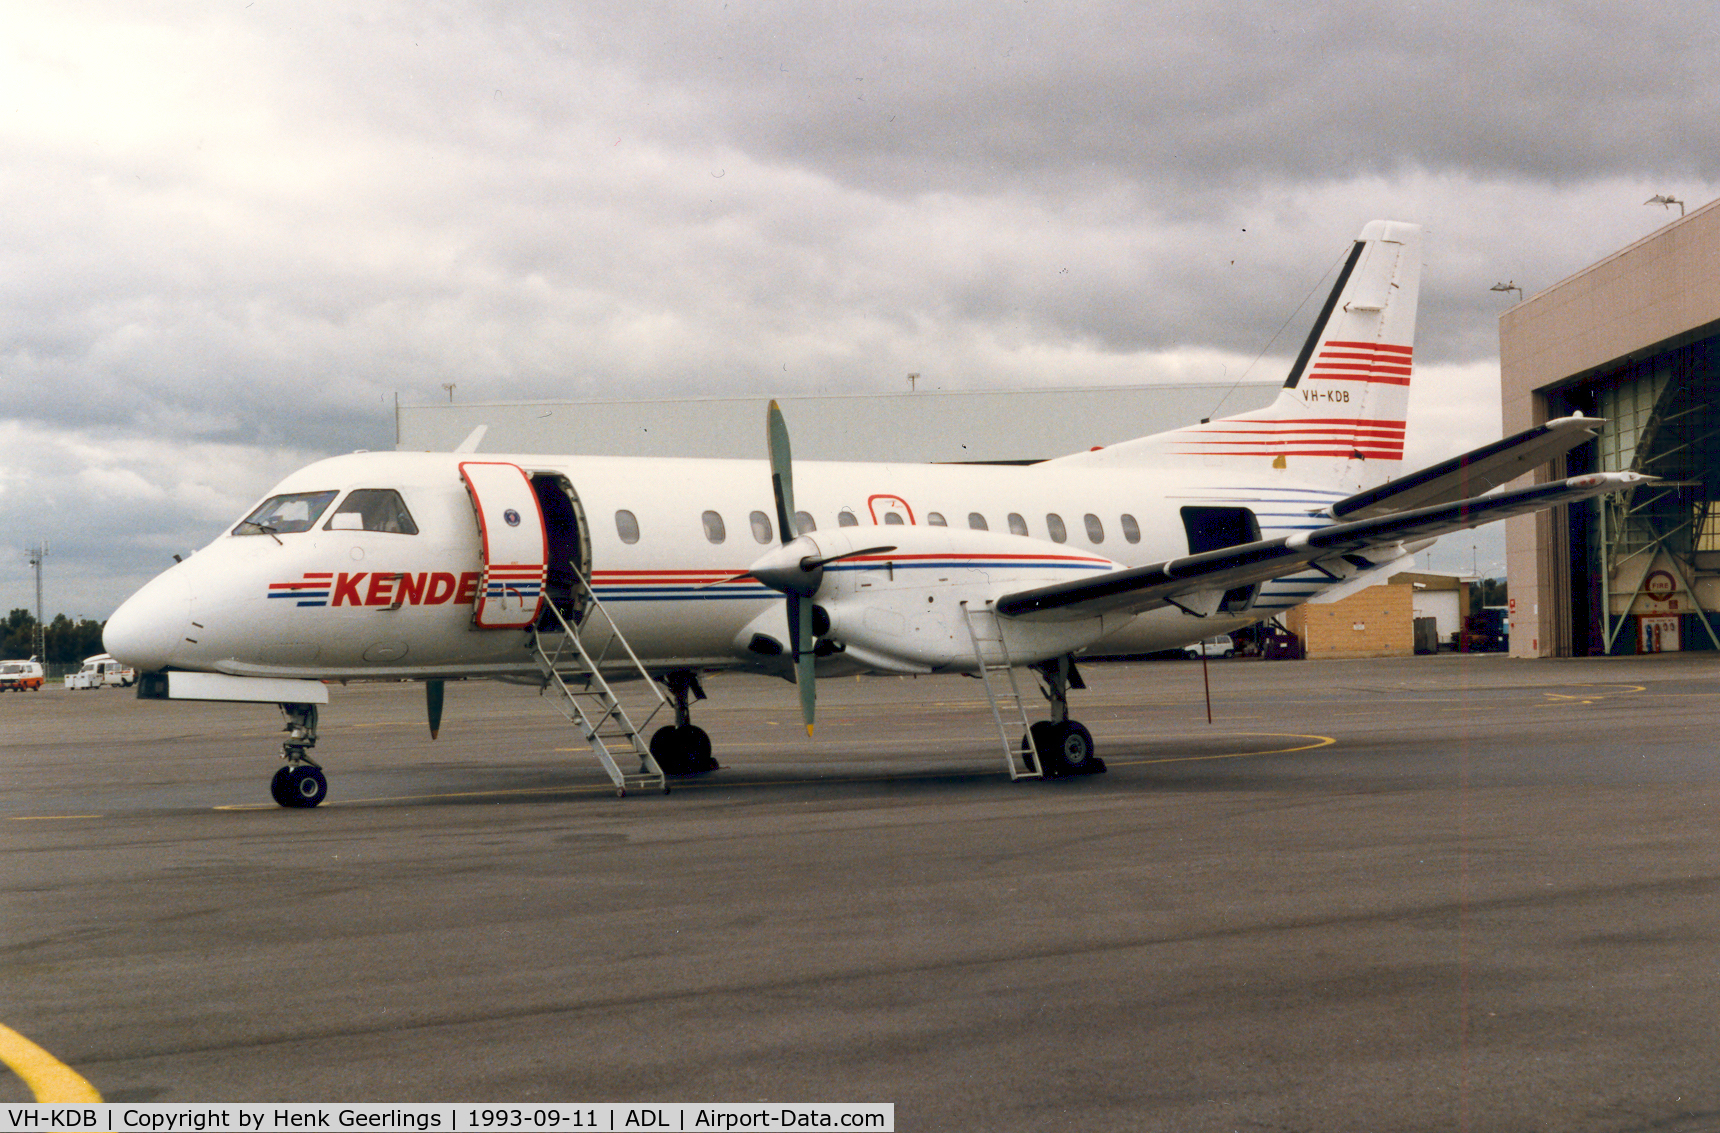 VH-KDB, 1984 Saab-Fairchild SF340 C/N 340A-008, Kendell Airlines. Ex PH-KJK of Netherlines